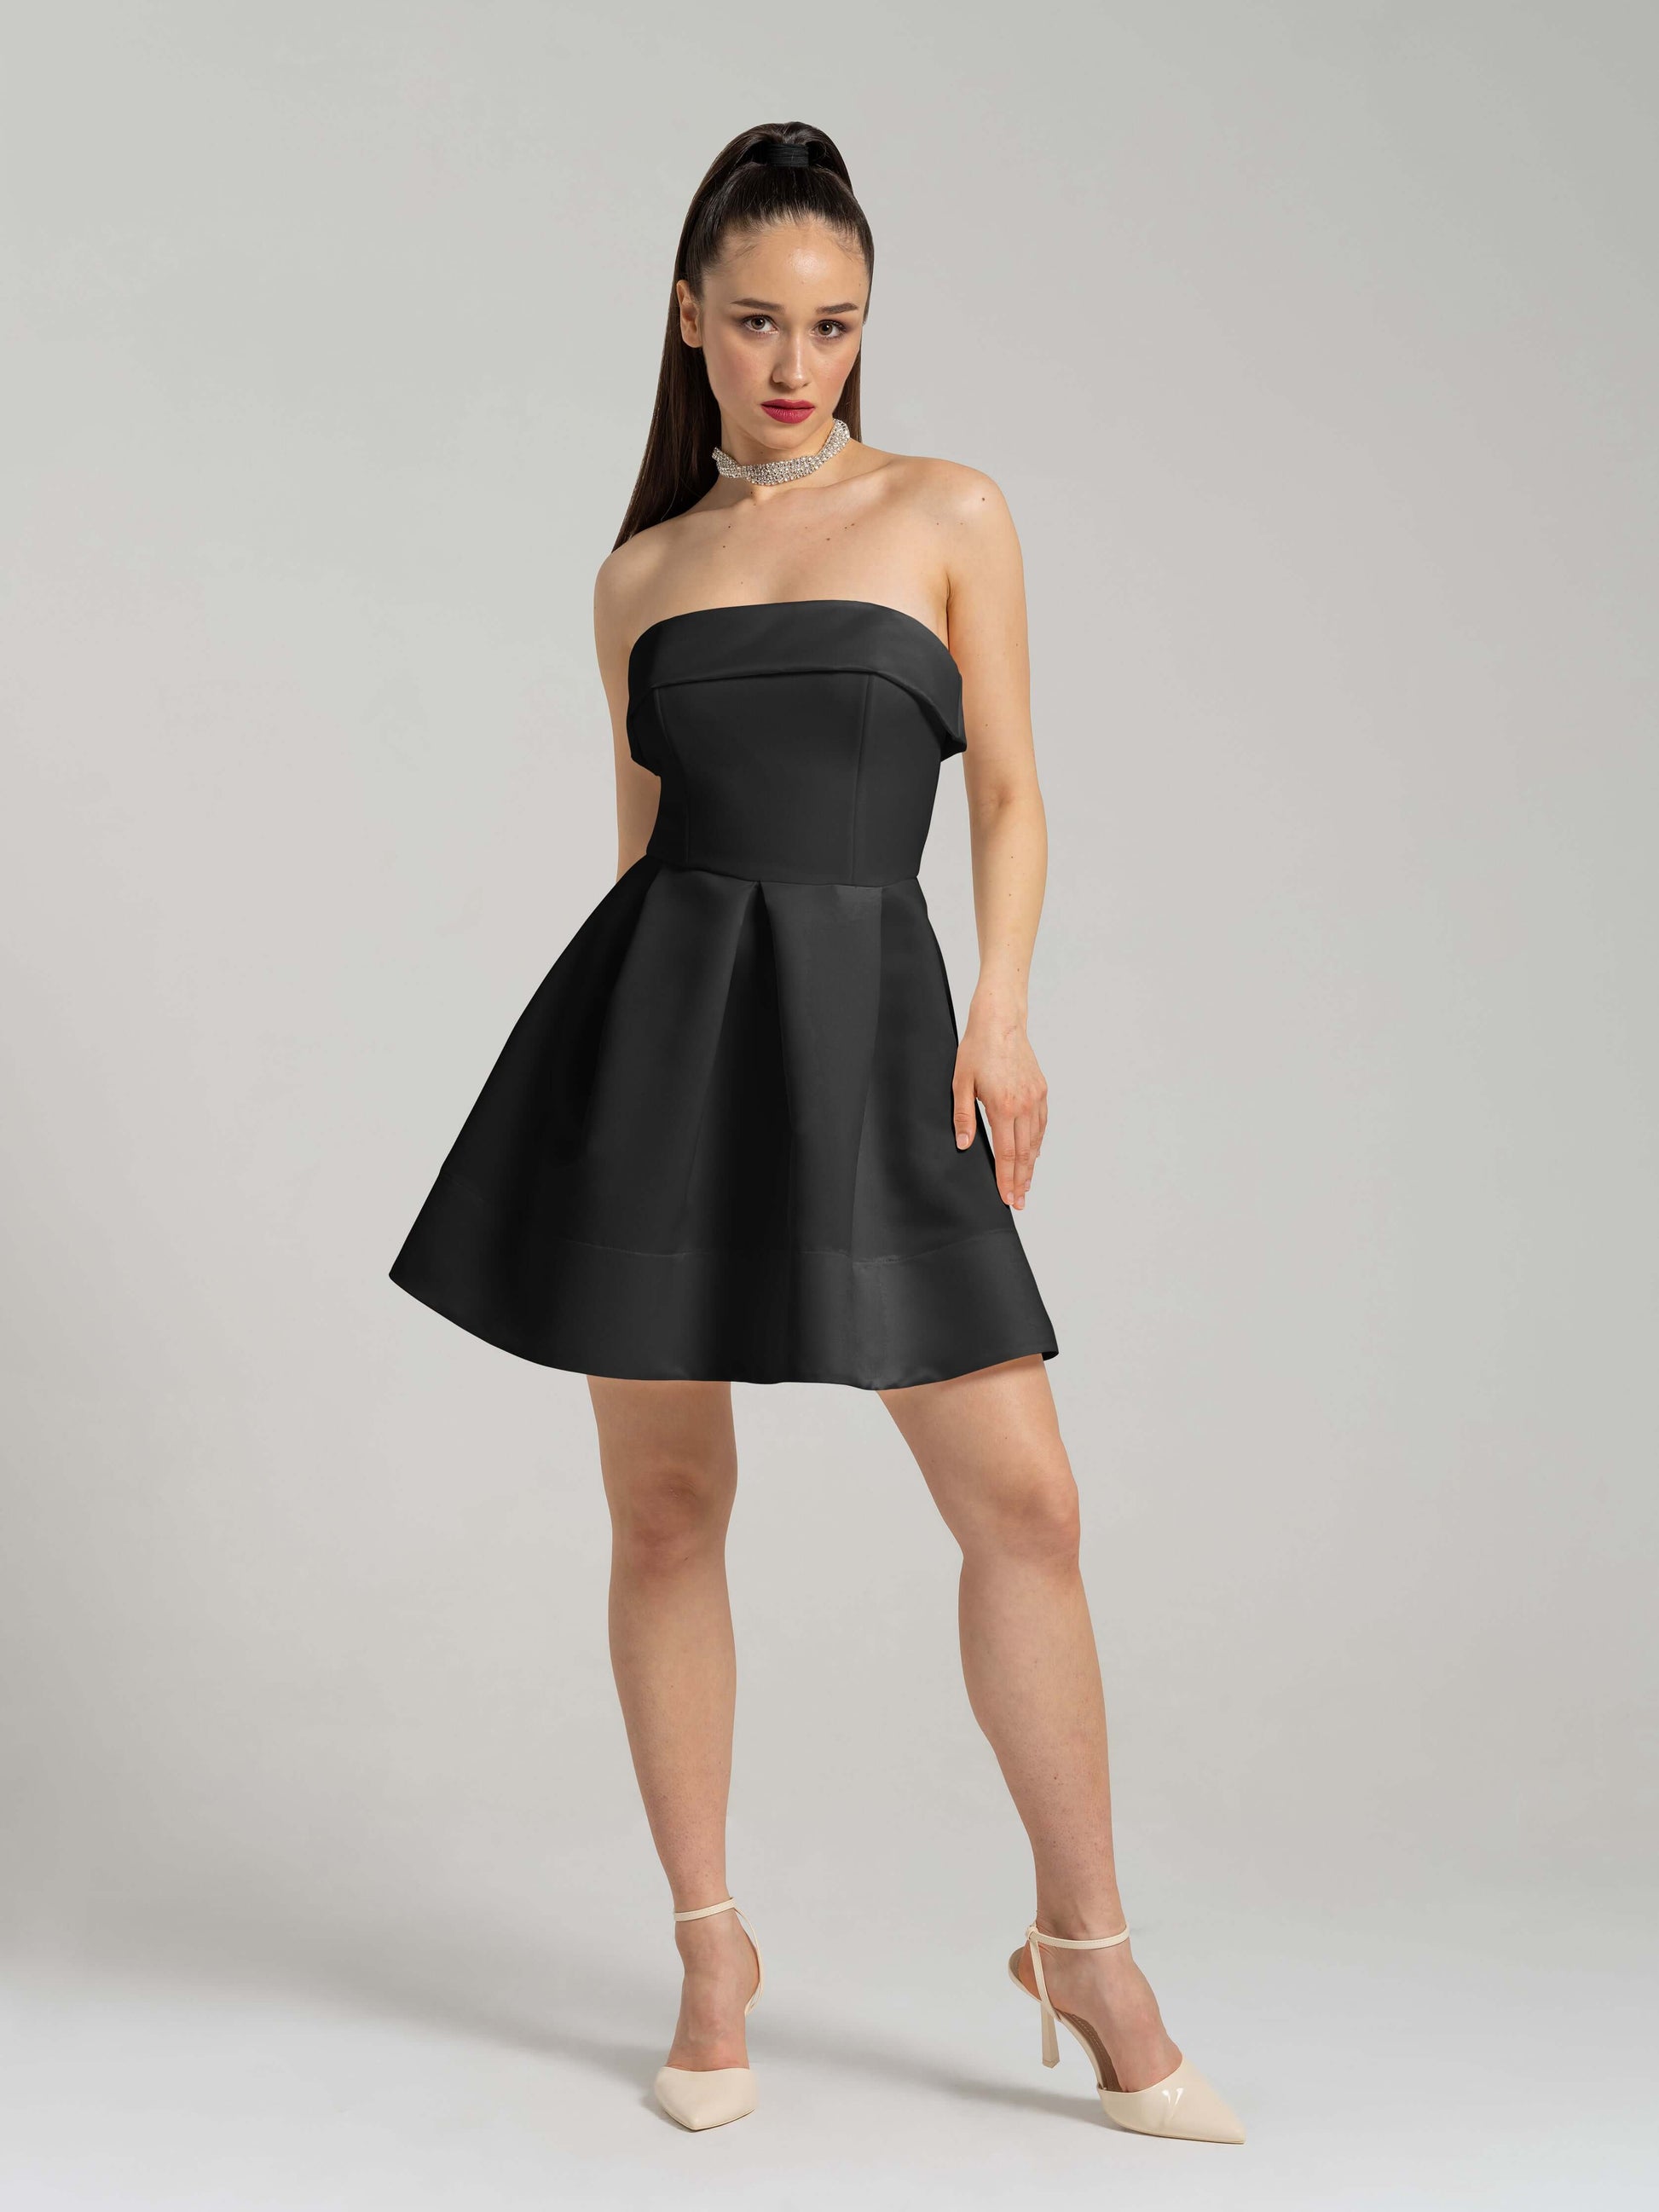 Wild Flower Flared Satin Mini Dress - Black by Tia Dorraine Women's Luxury Fashion Designer Clothing Brand